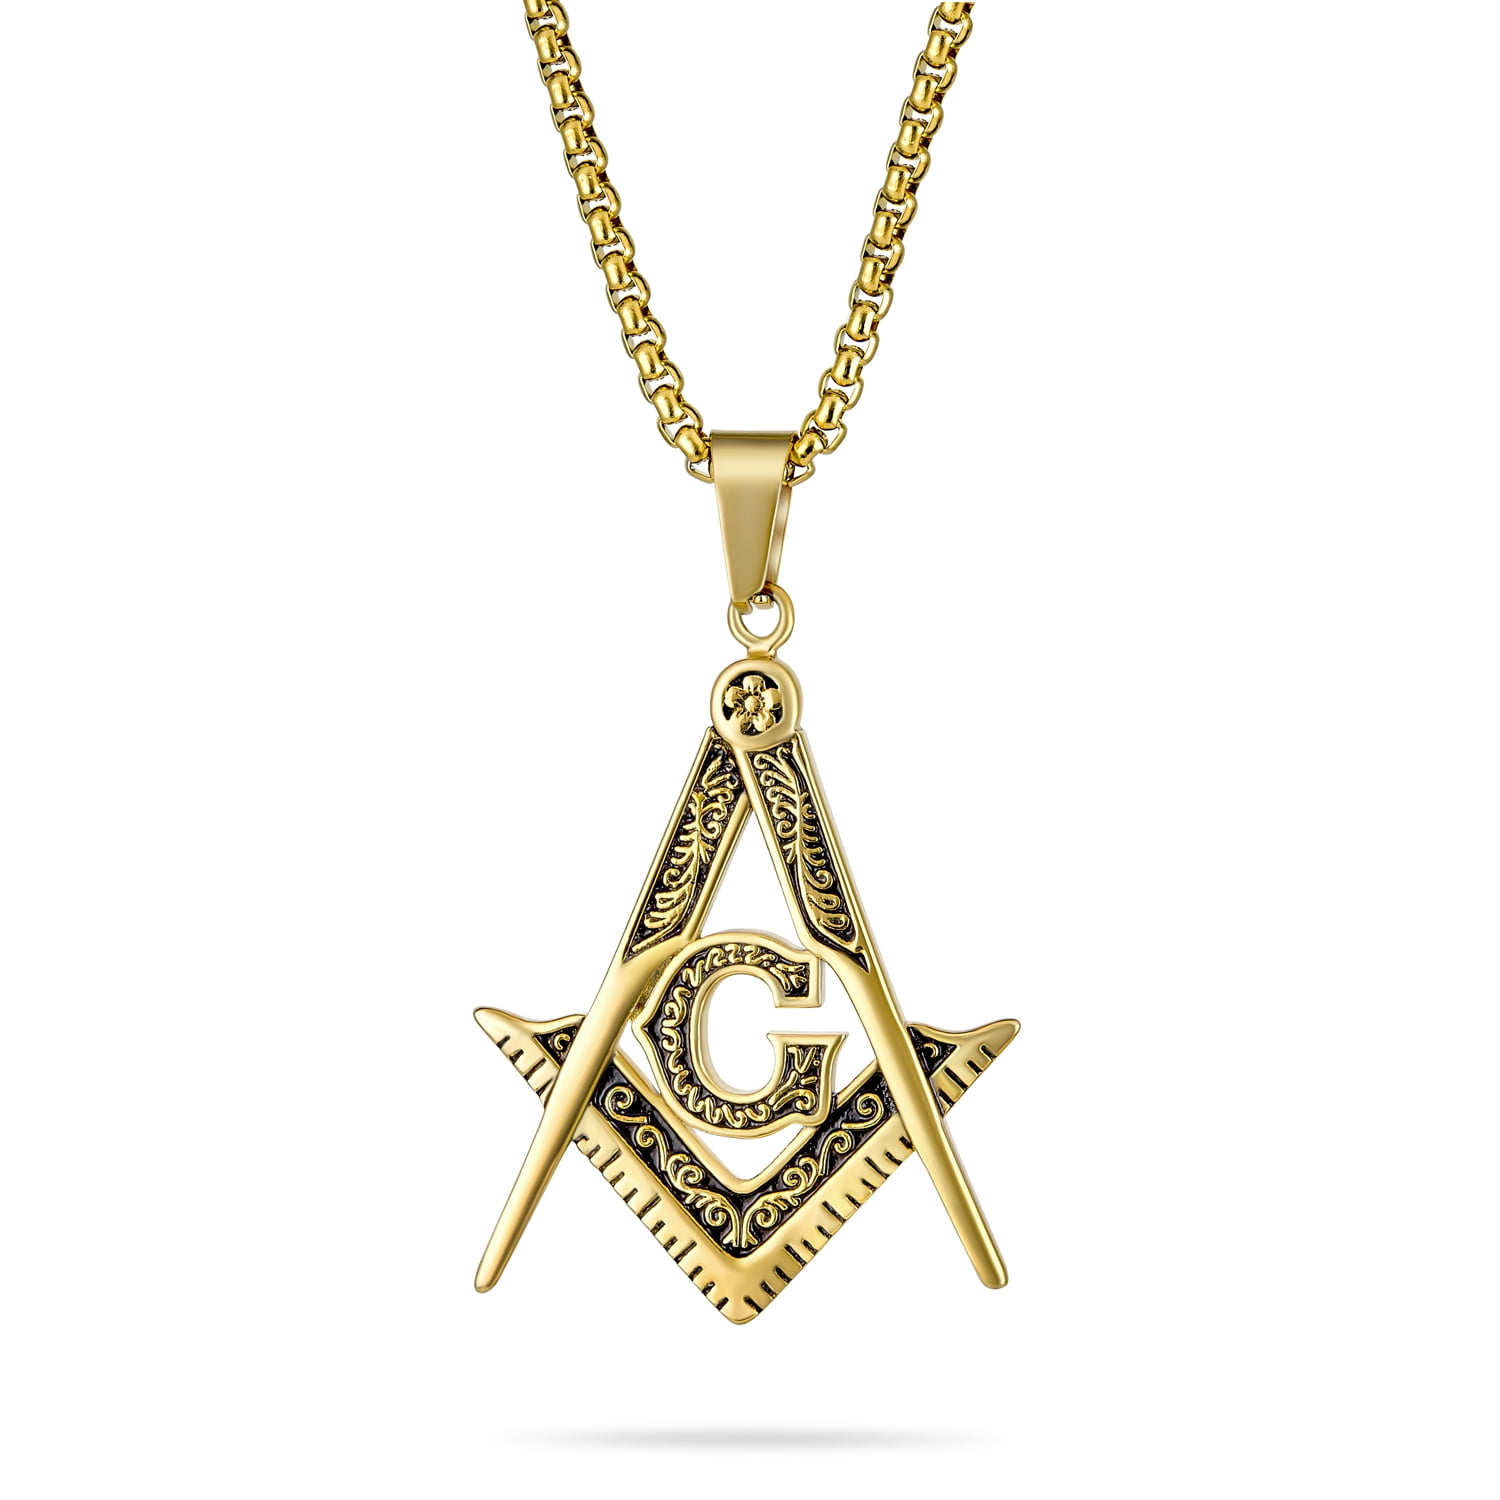 In Car Wooden Beads & Masonic Square & Compass Pendant Freemason Mason Souvenir 